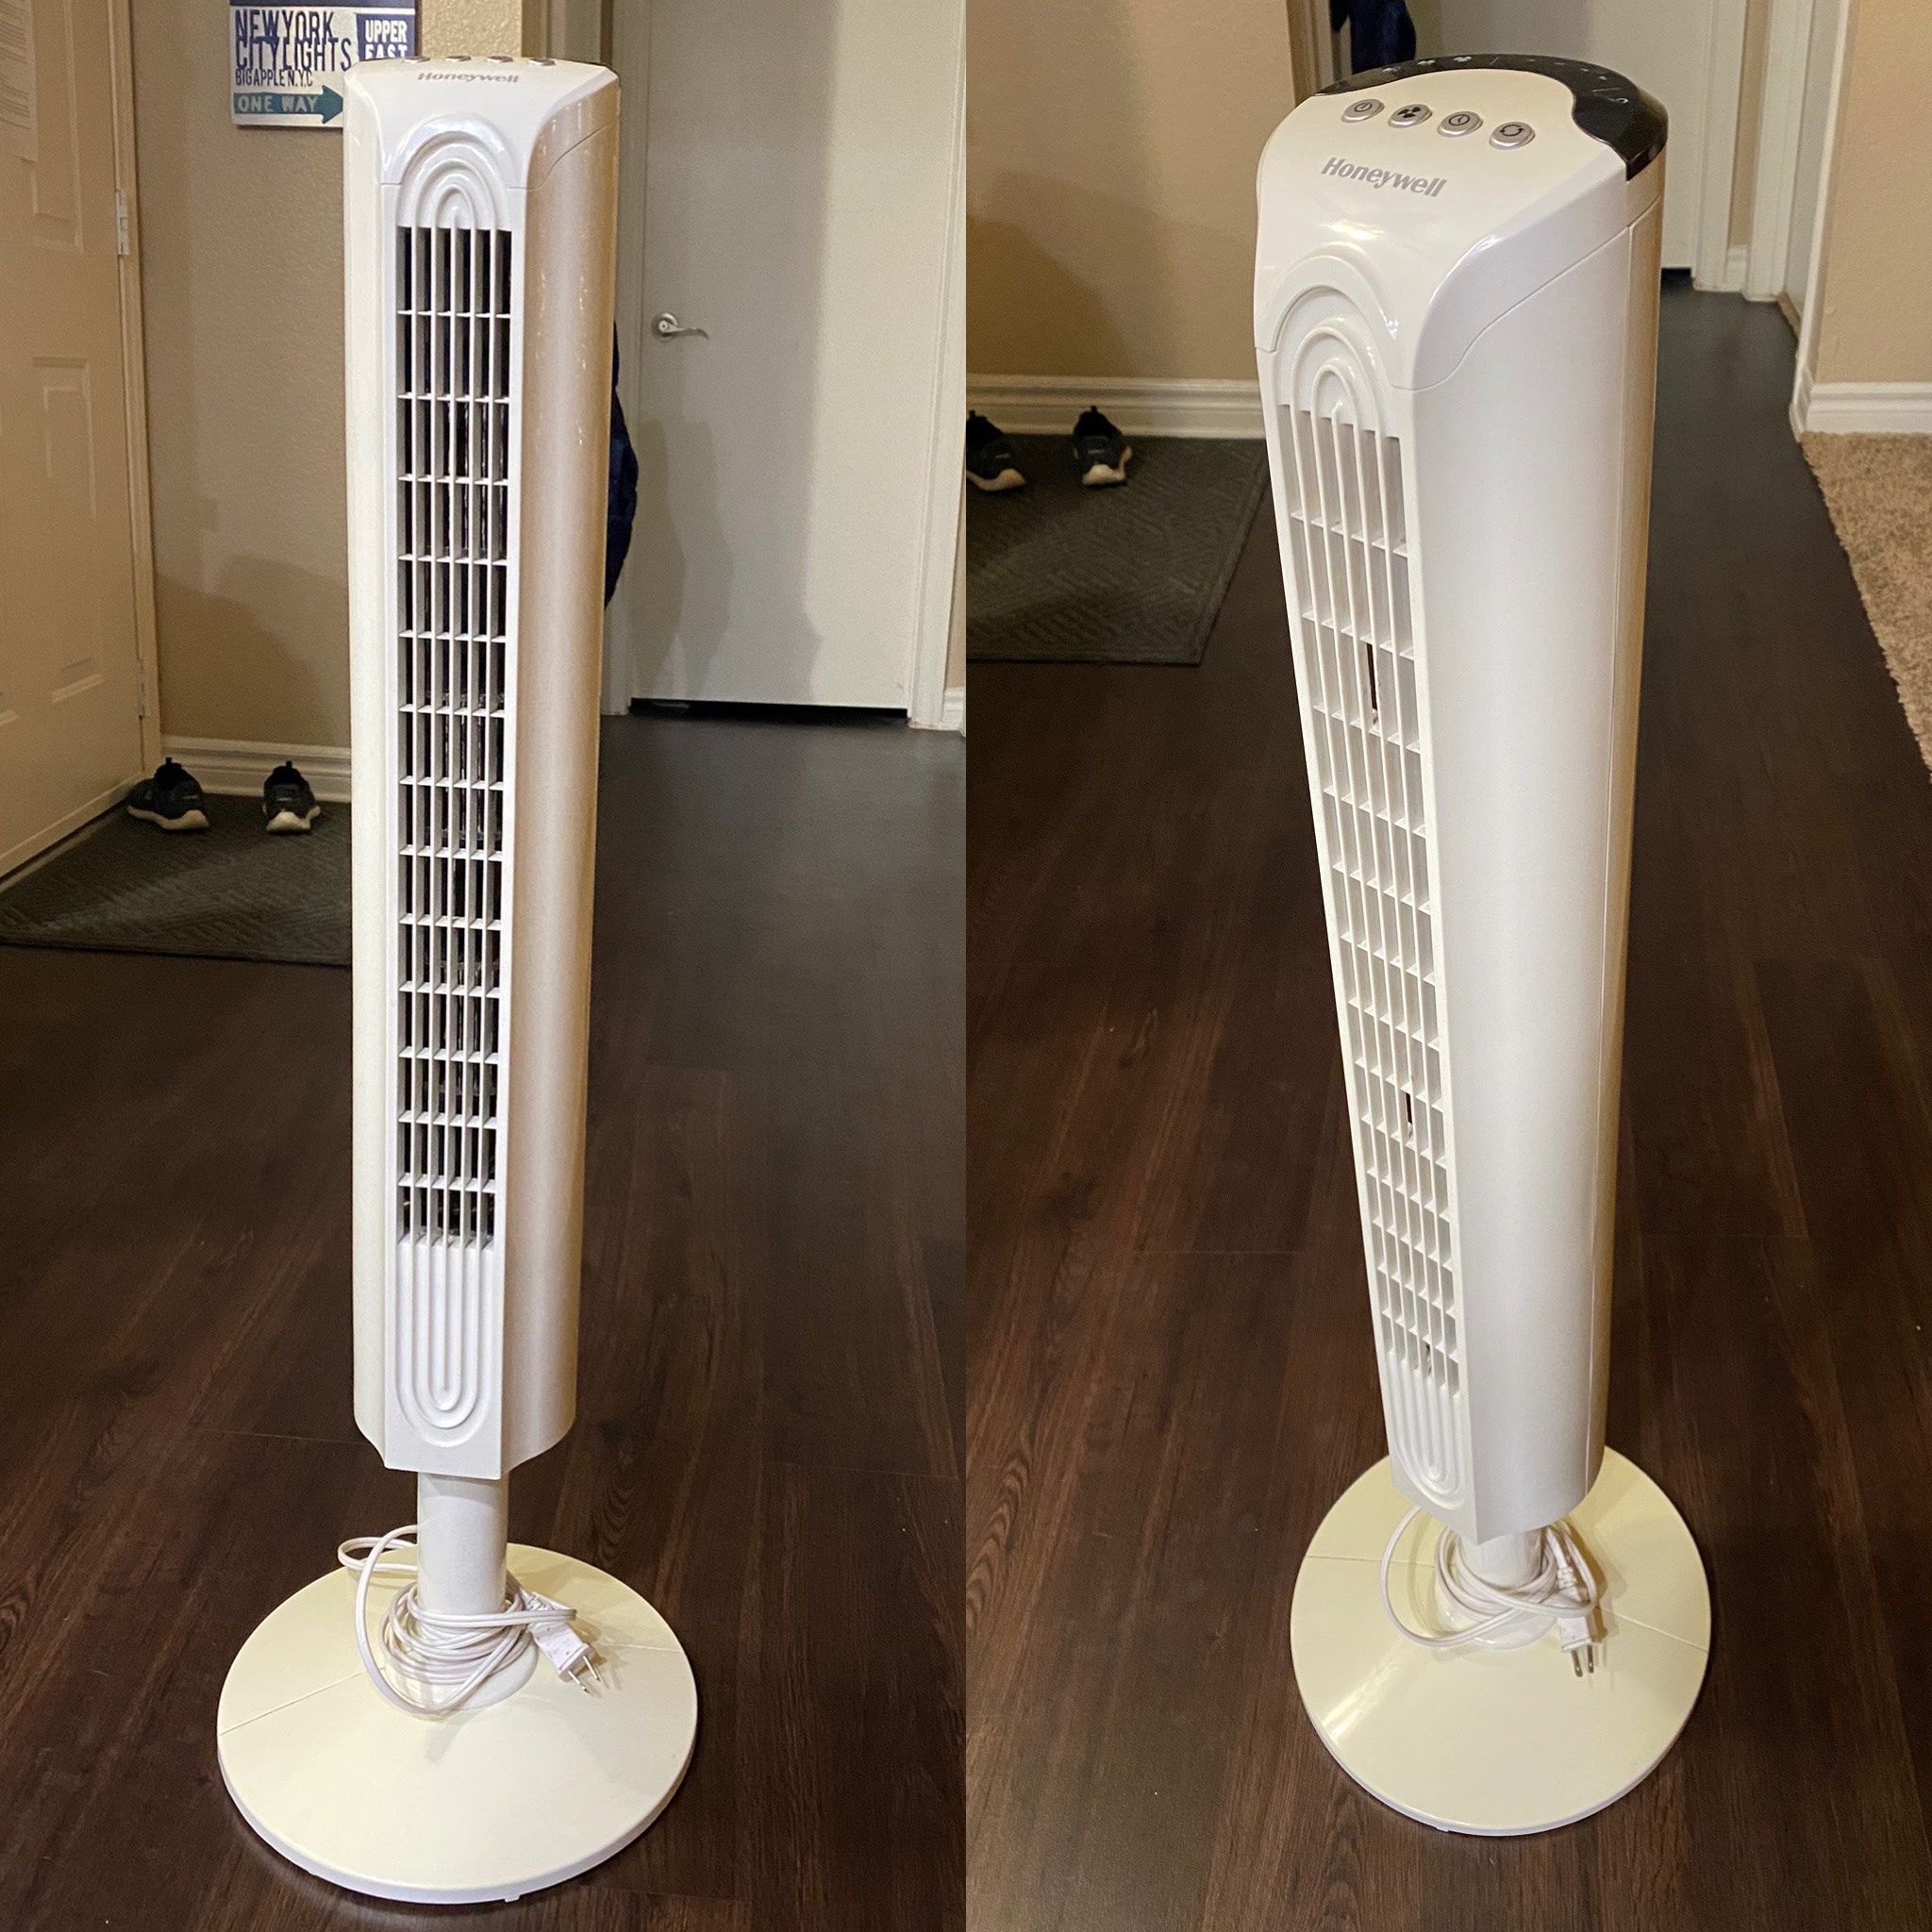 Honeywell Home Control Tower Fan